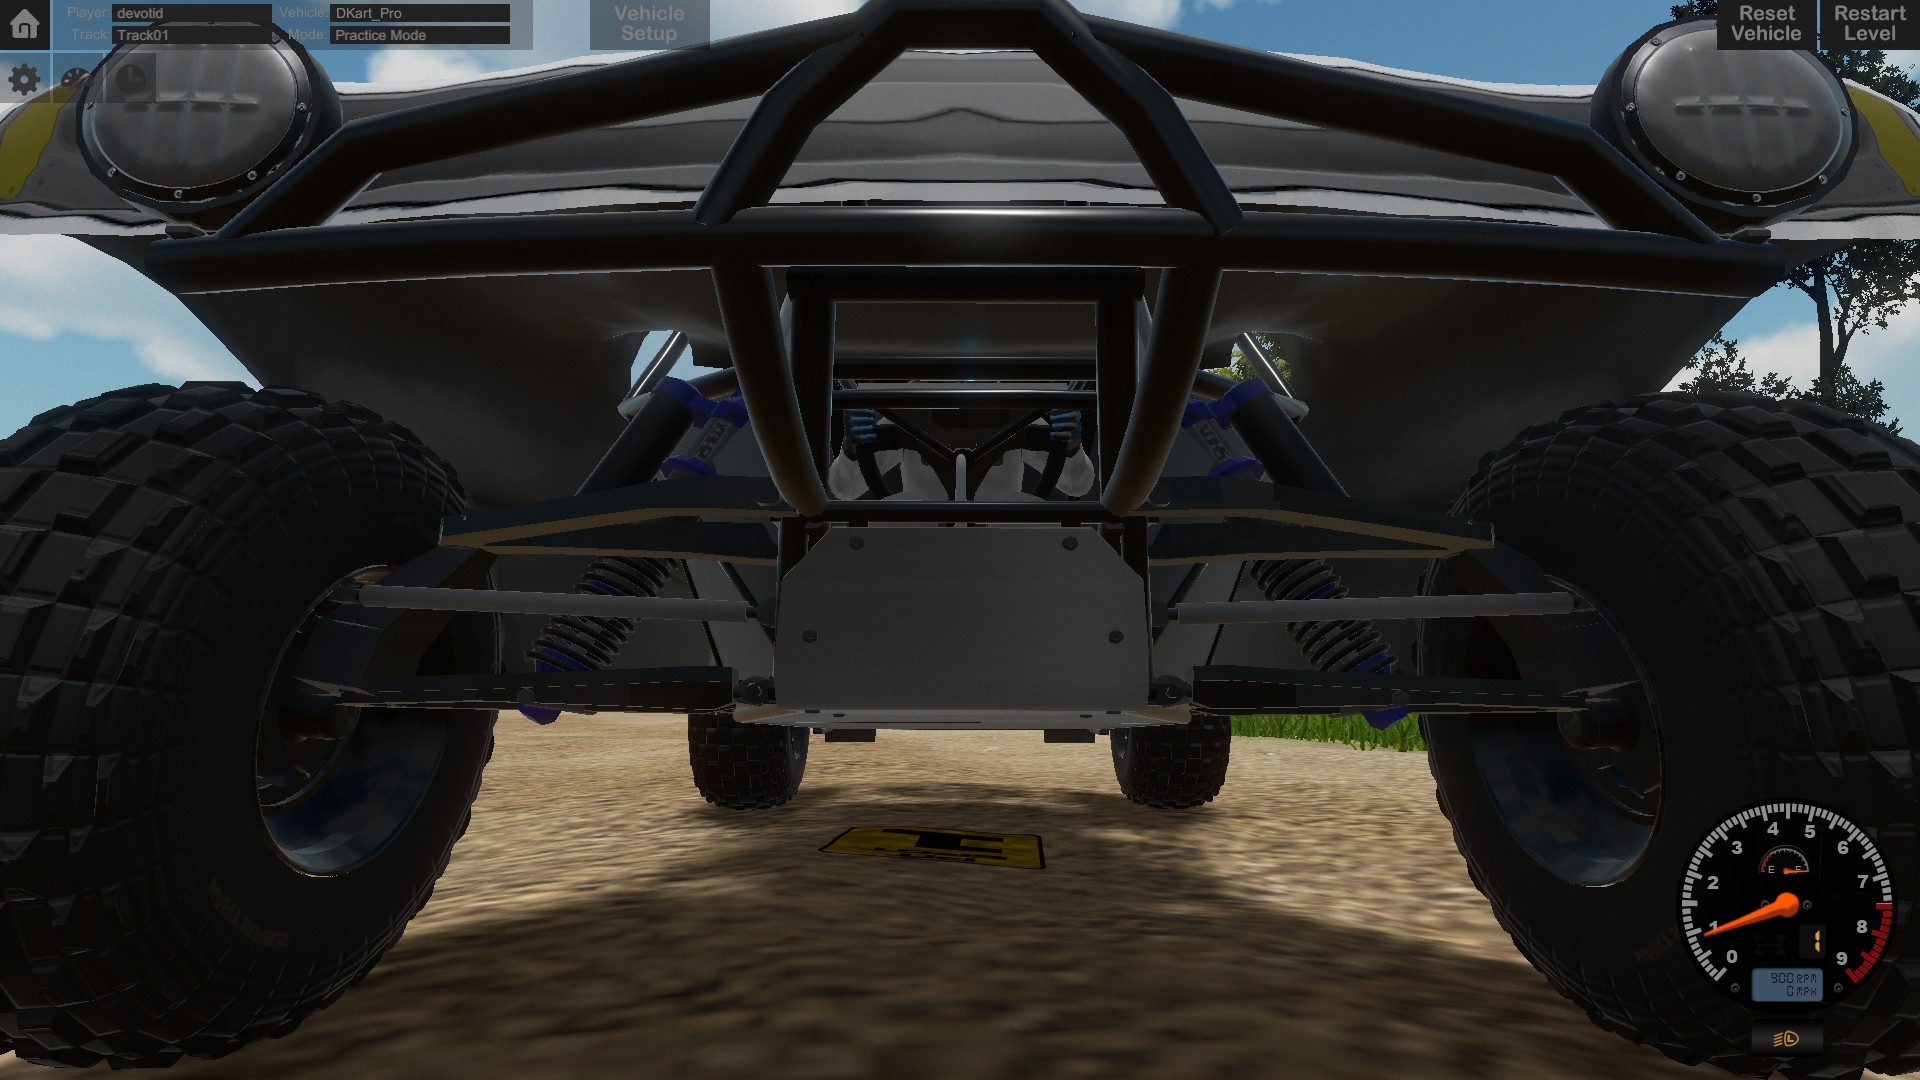 D Series OFF ROAD Driving Simulation screenshot